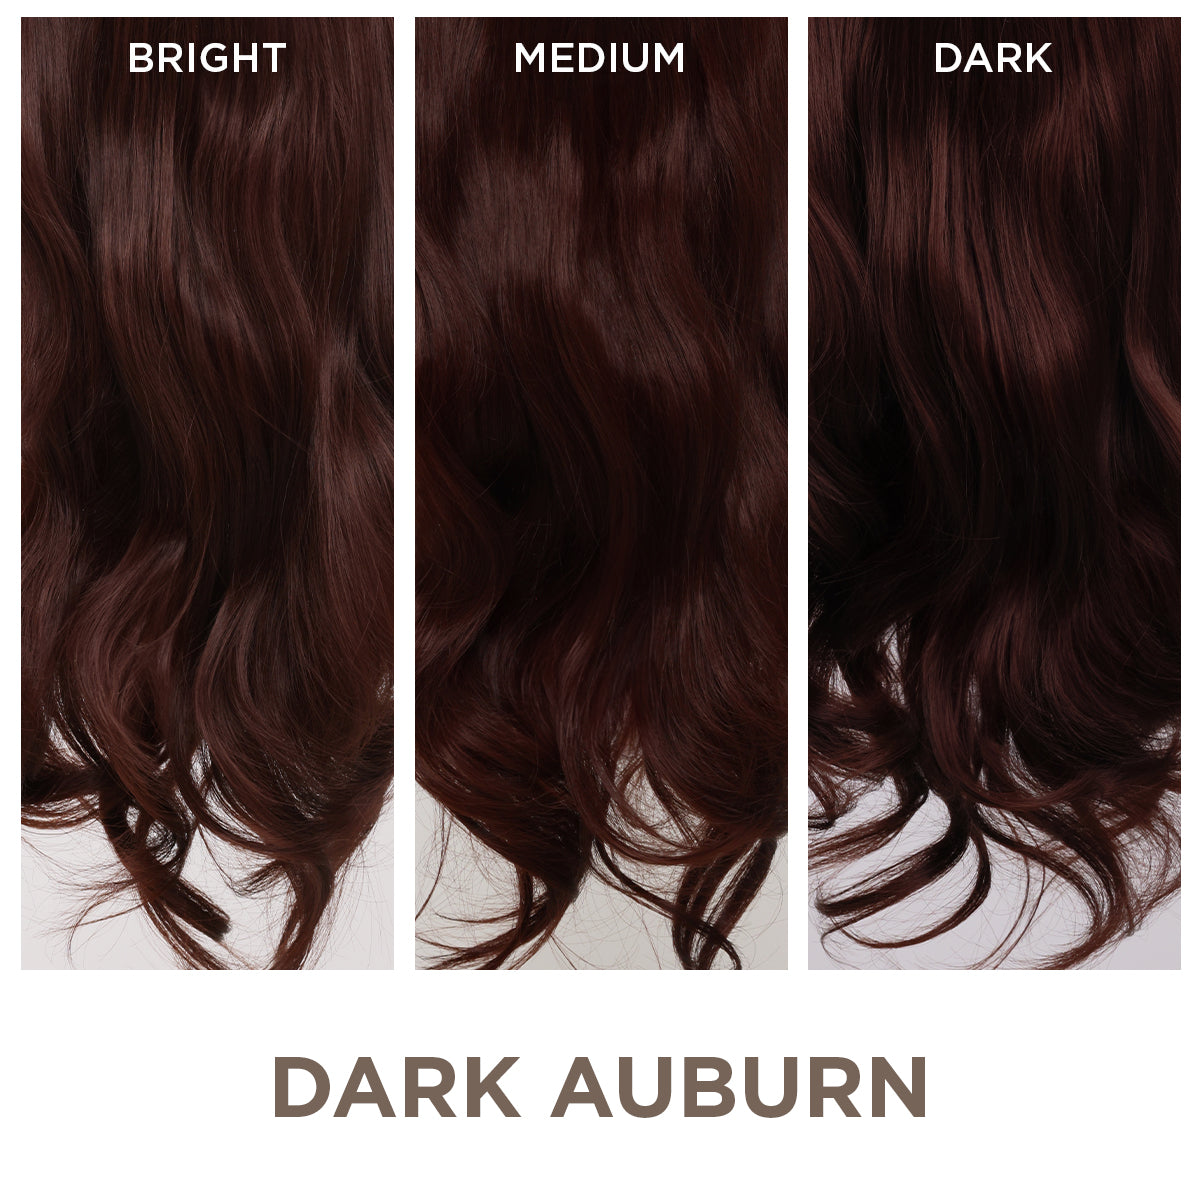 Dark Auburn + 1 FREE HALO